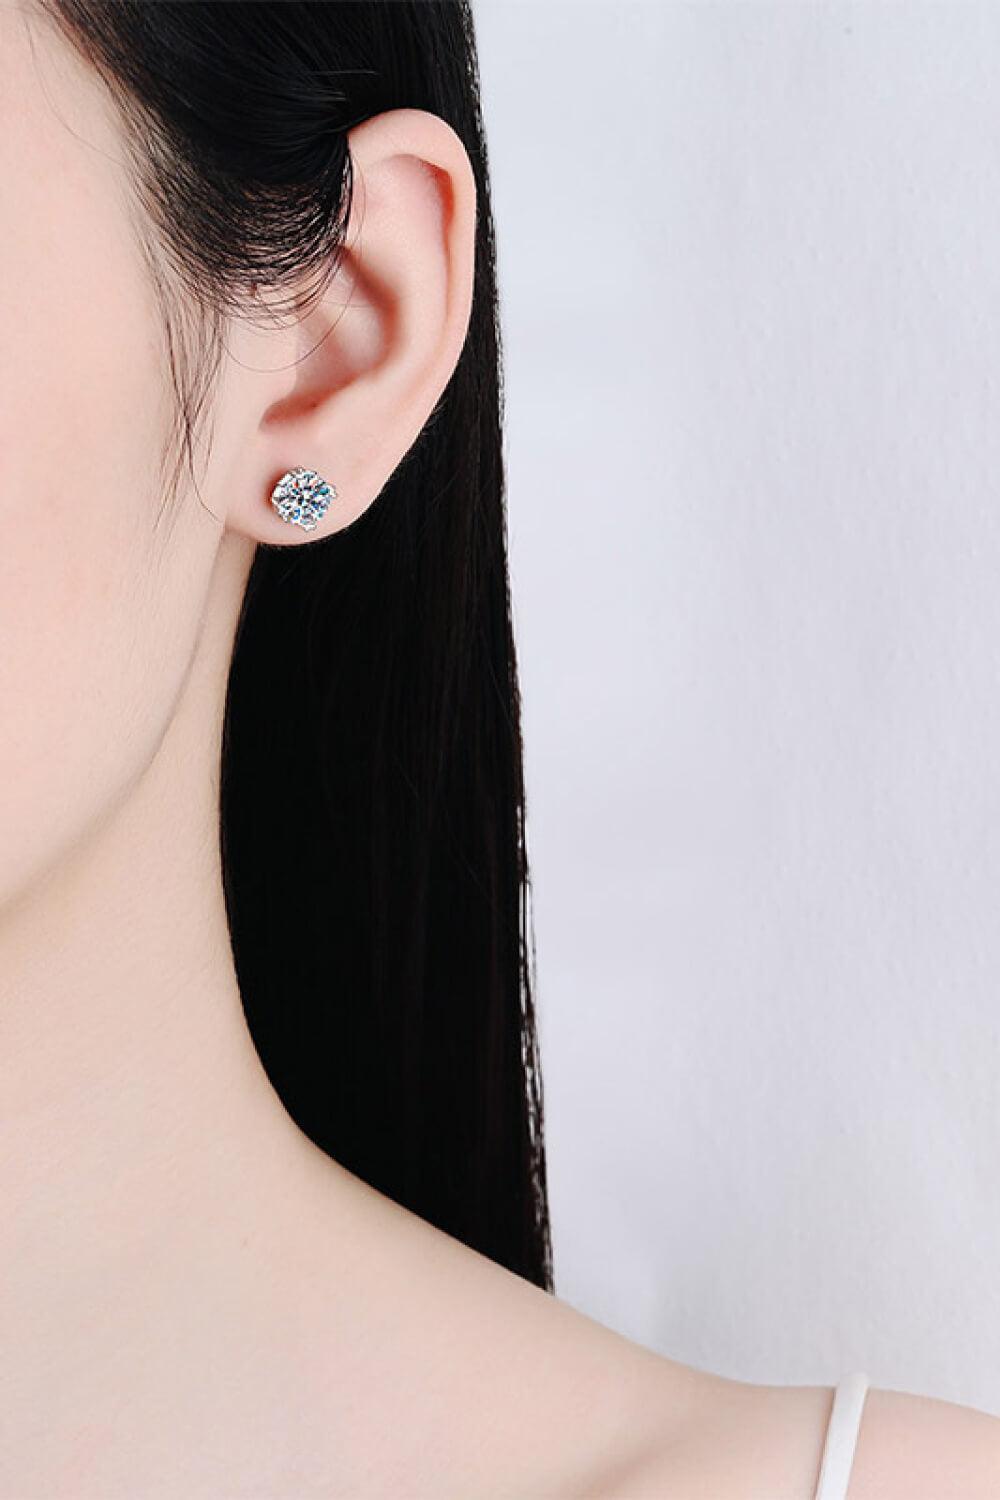 Stunning 4 Carat Moissanite Stud Earrings - MXSTUDIO.COM